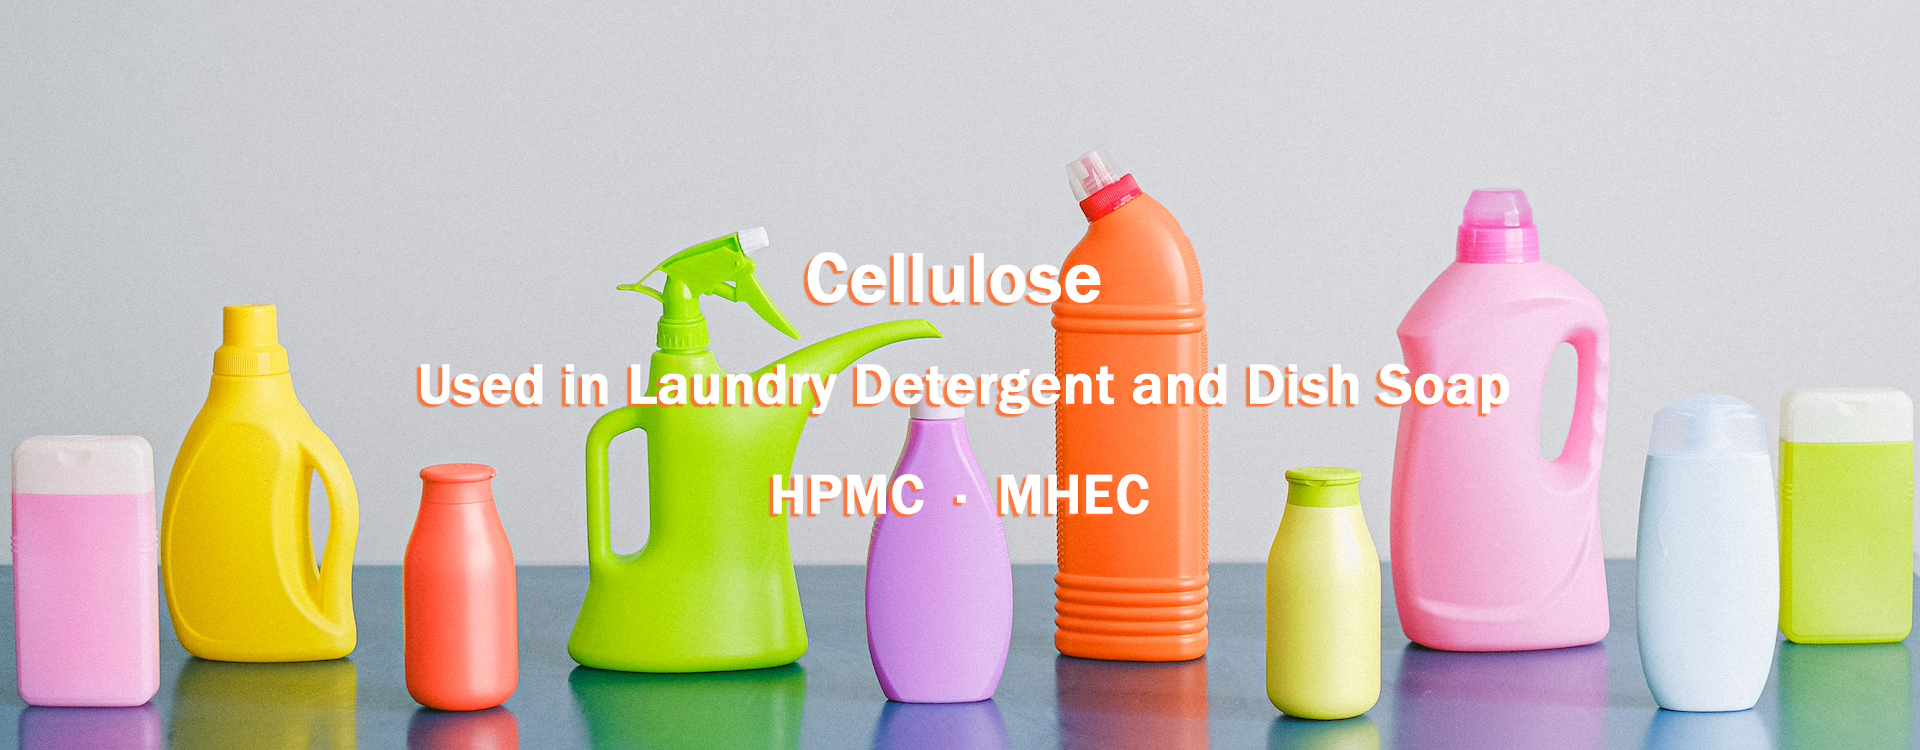 hpmc-for-detergent